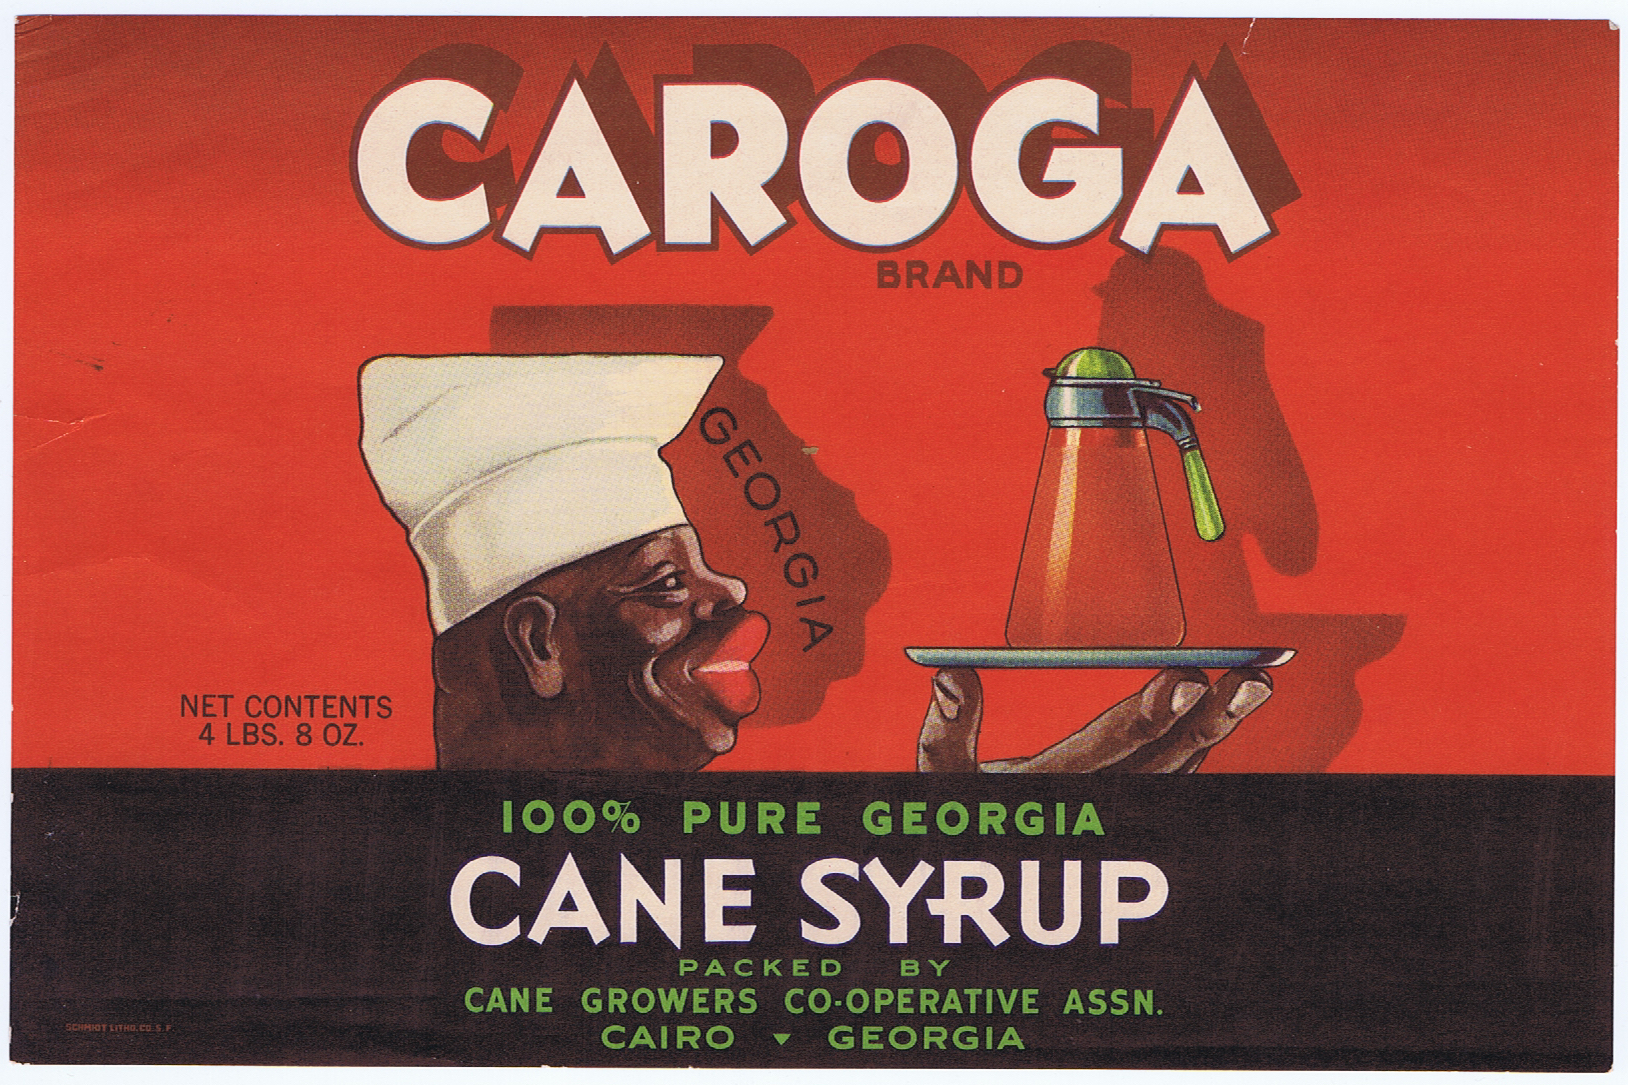 BSG167	CAROGA BRAND CANE SYRUP CAN LABEL